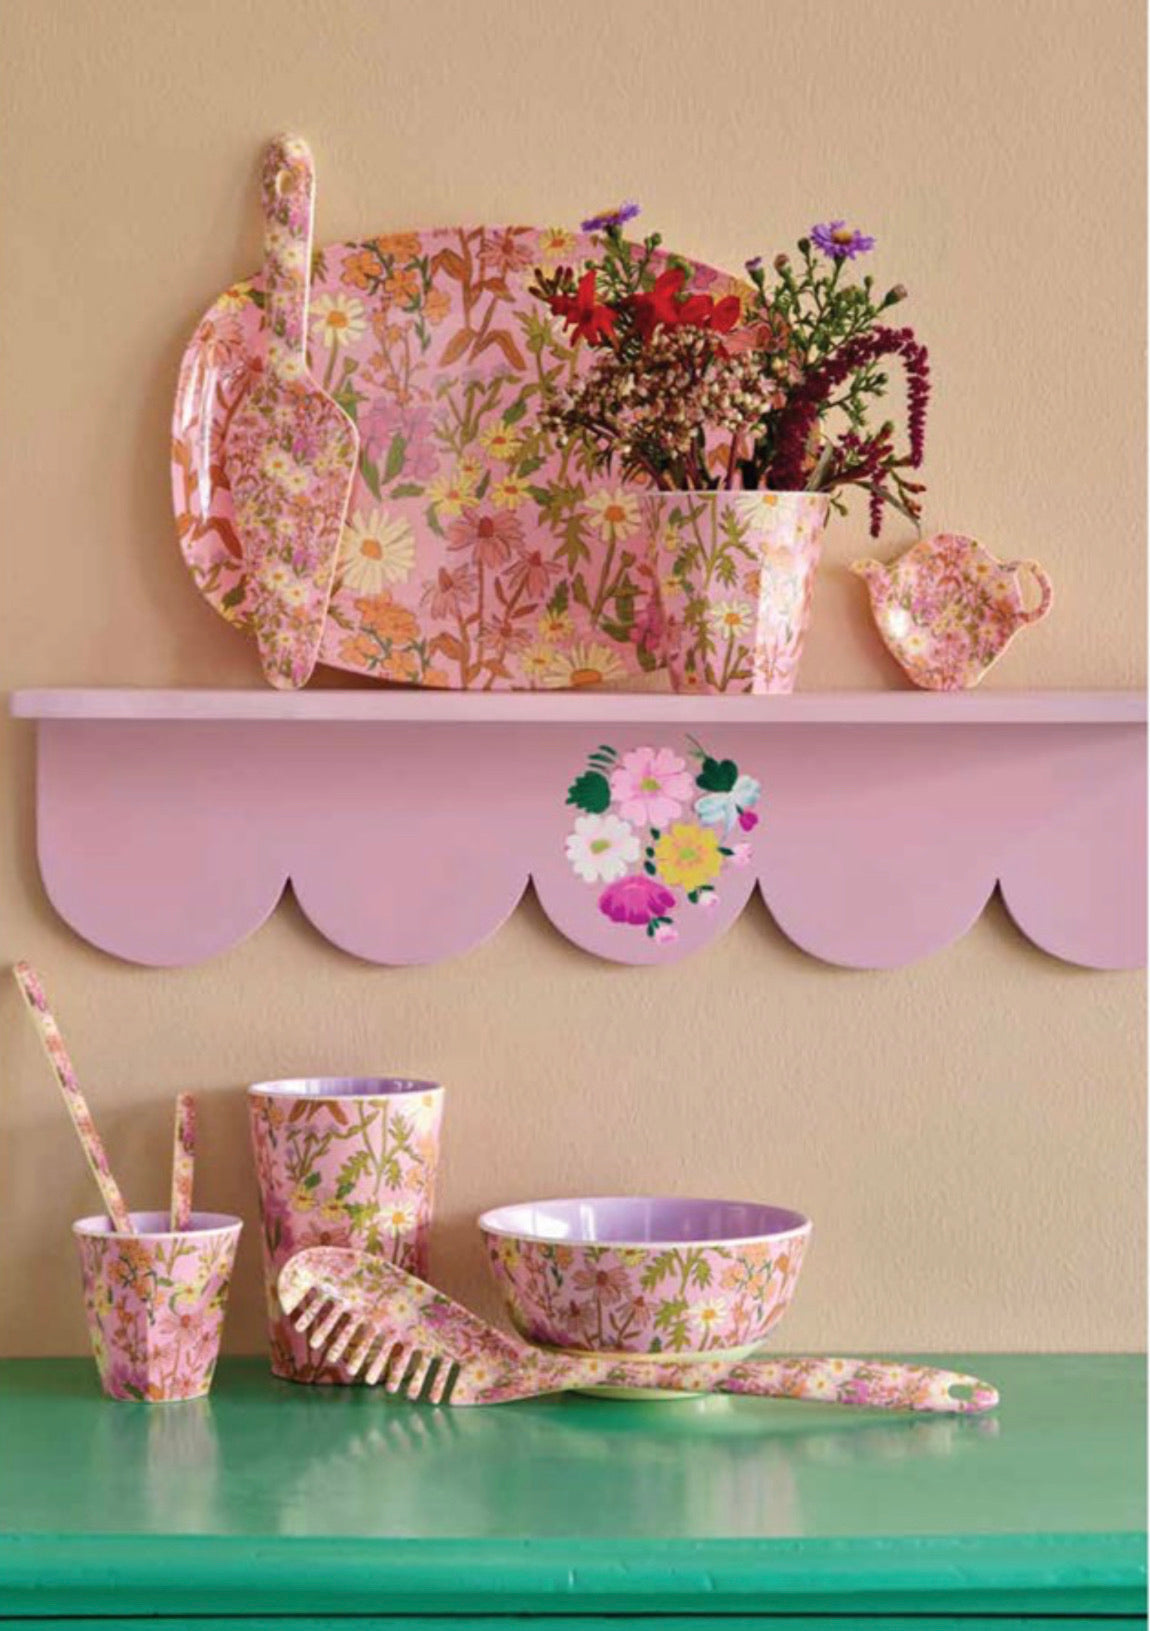 Medium Melamine Cup - Soft Pink - Daisy Dearest Print - Rice By Rice